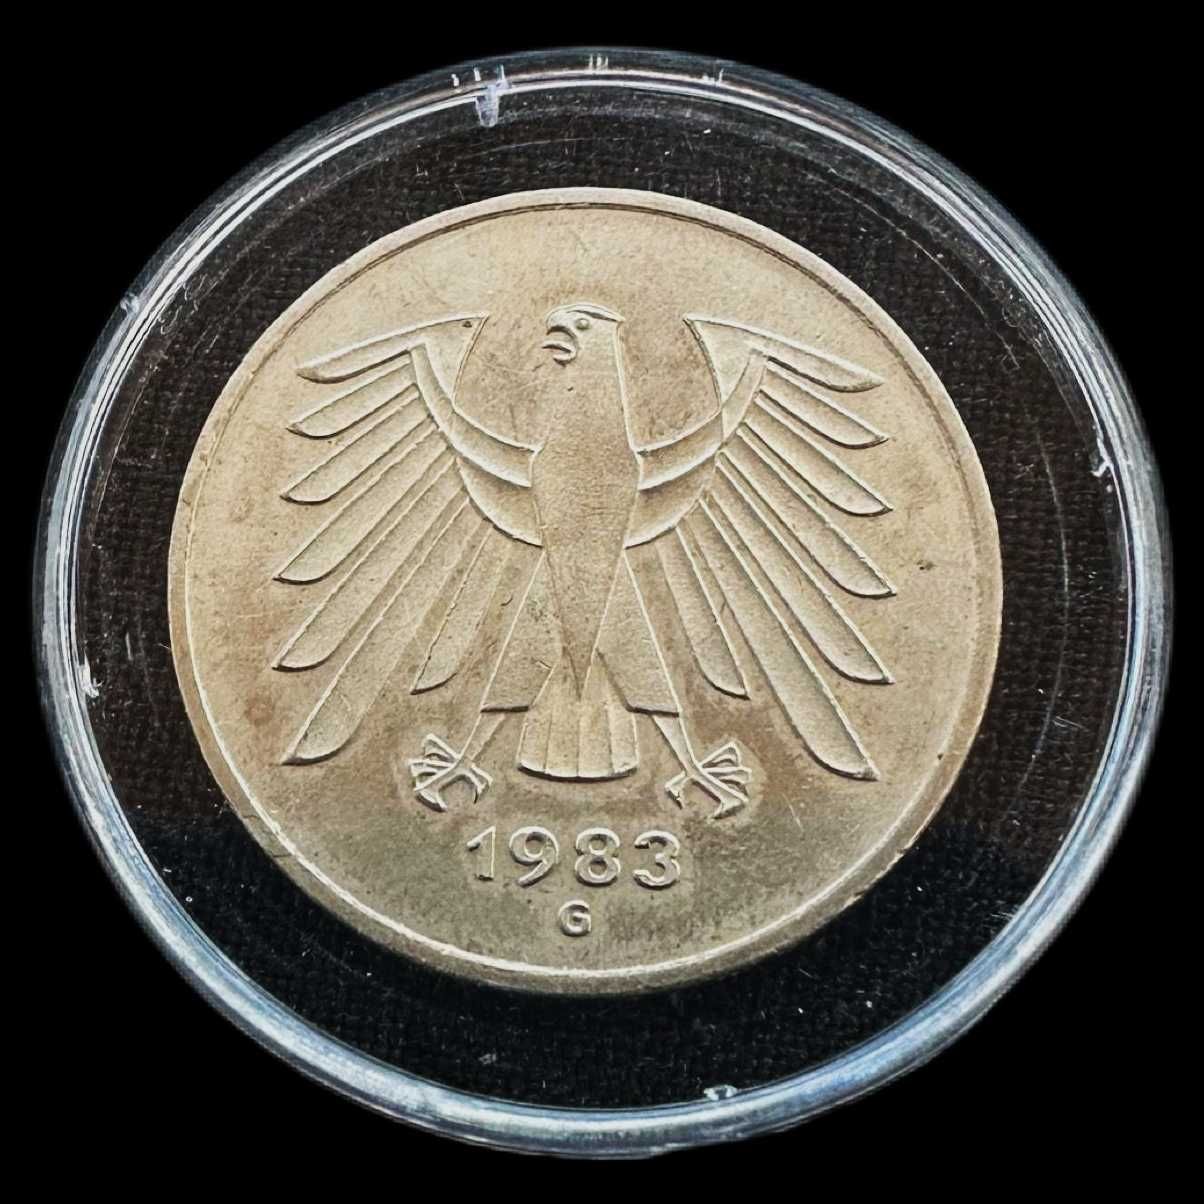 Moeda de 5 Deutchmark - 1983 - "G" - Karlsruhe - Alemanha